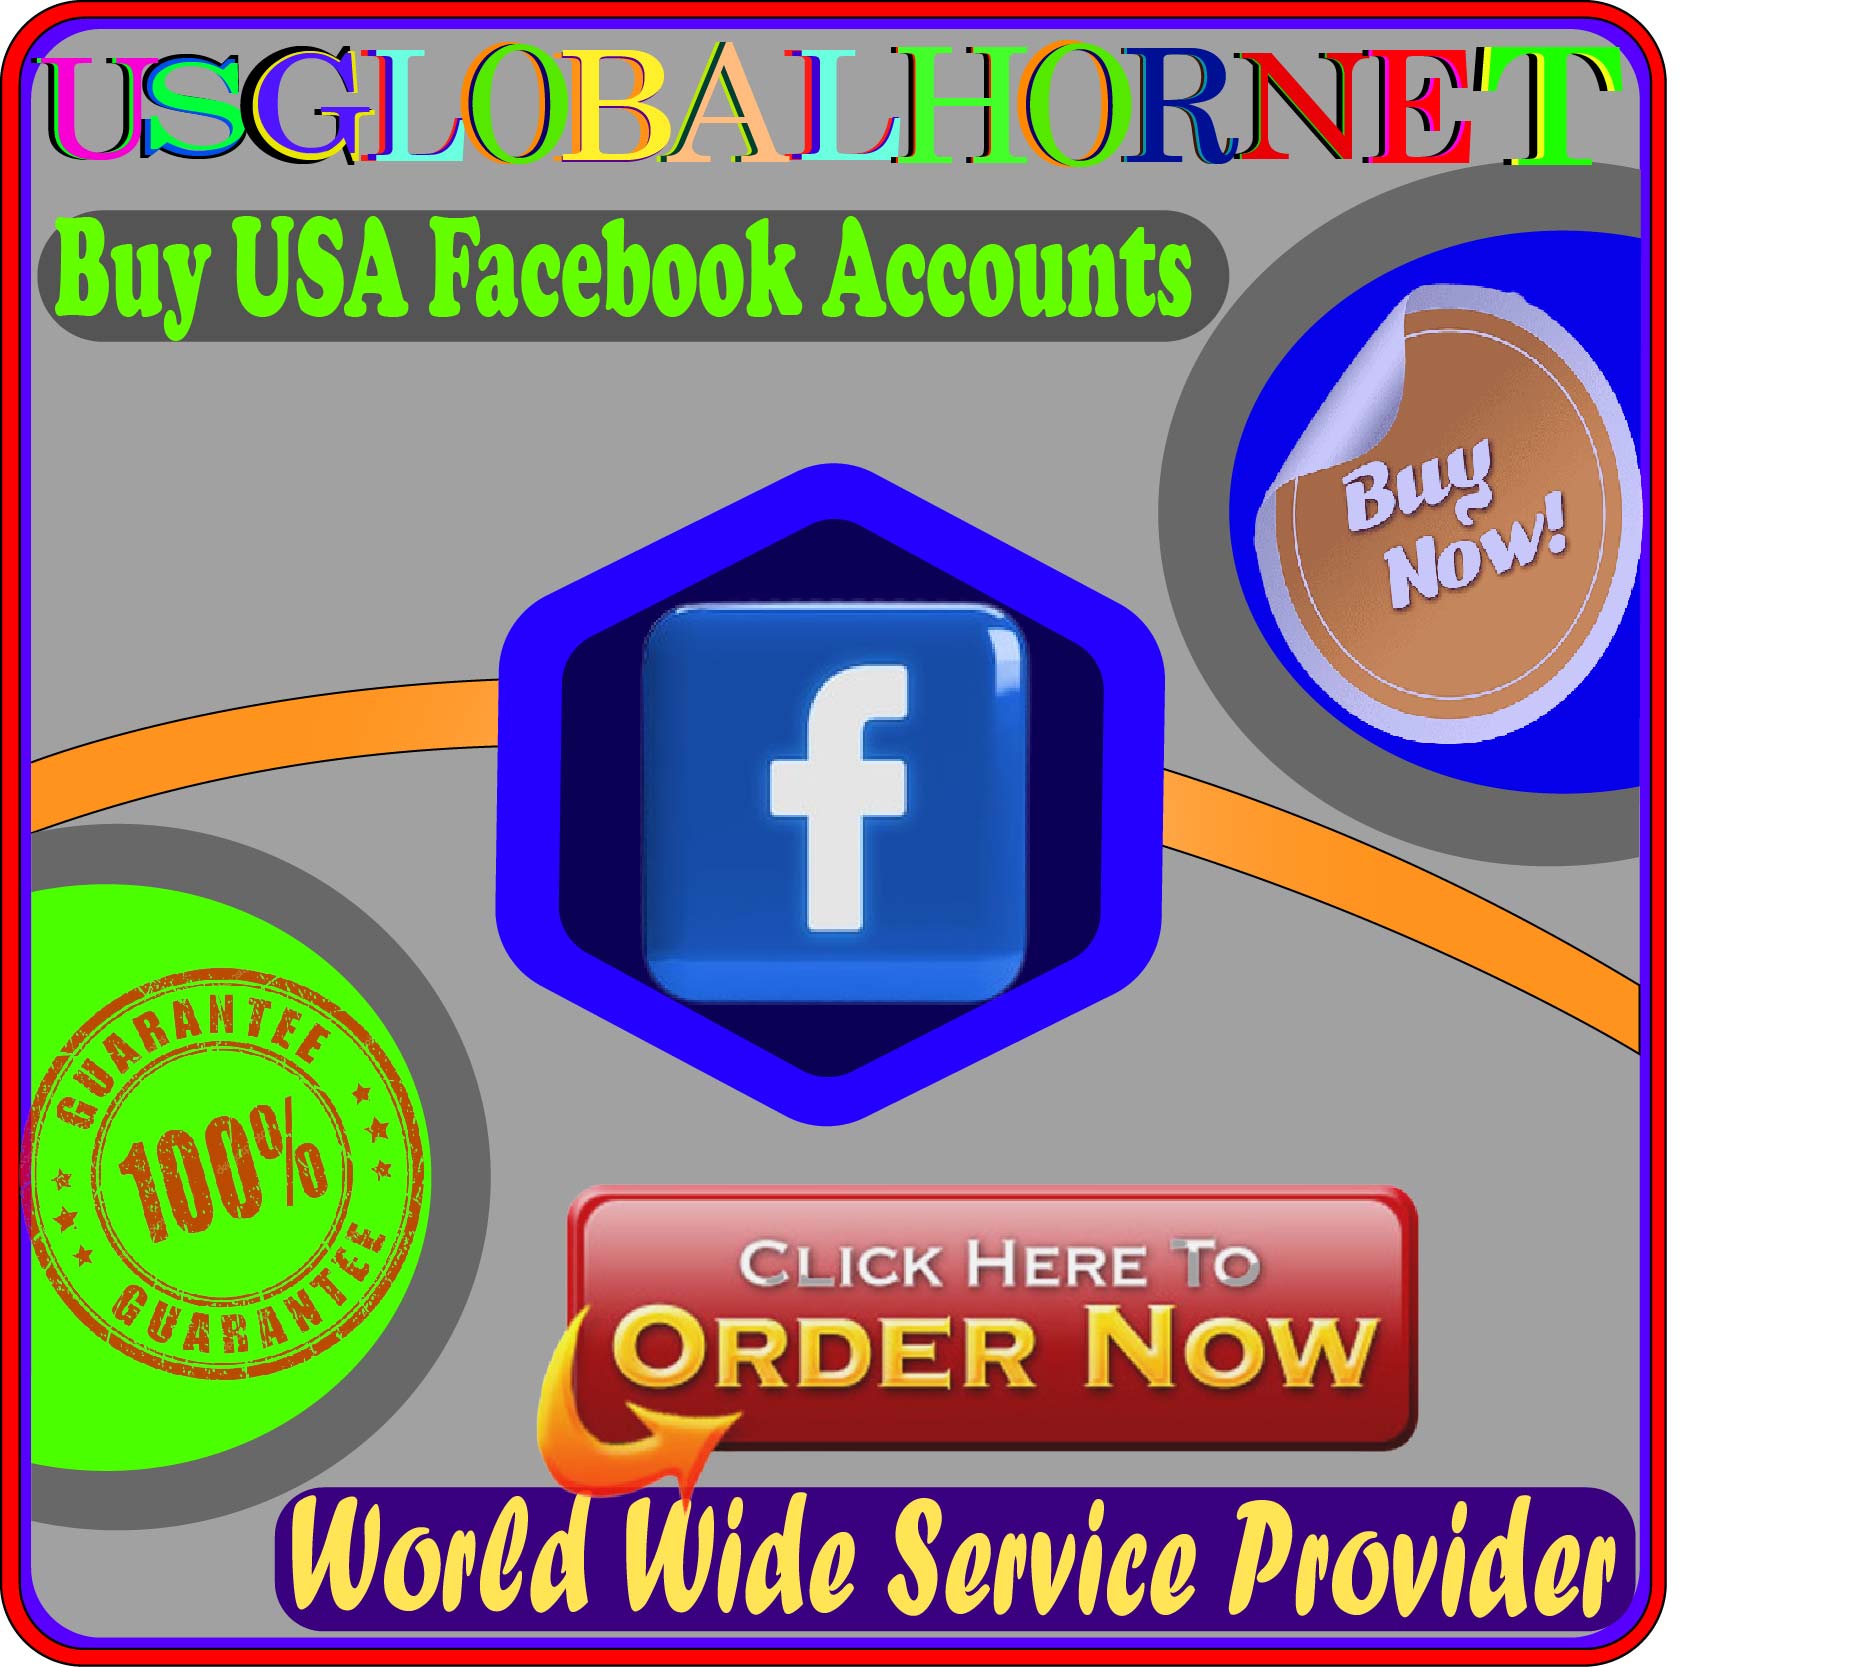 Buy USA Facebook Accounts - 100% USA,UK,LS,AND WORLD